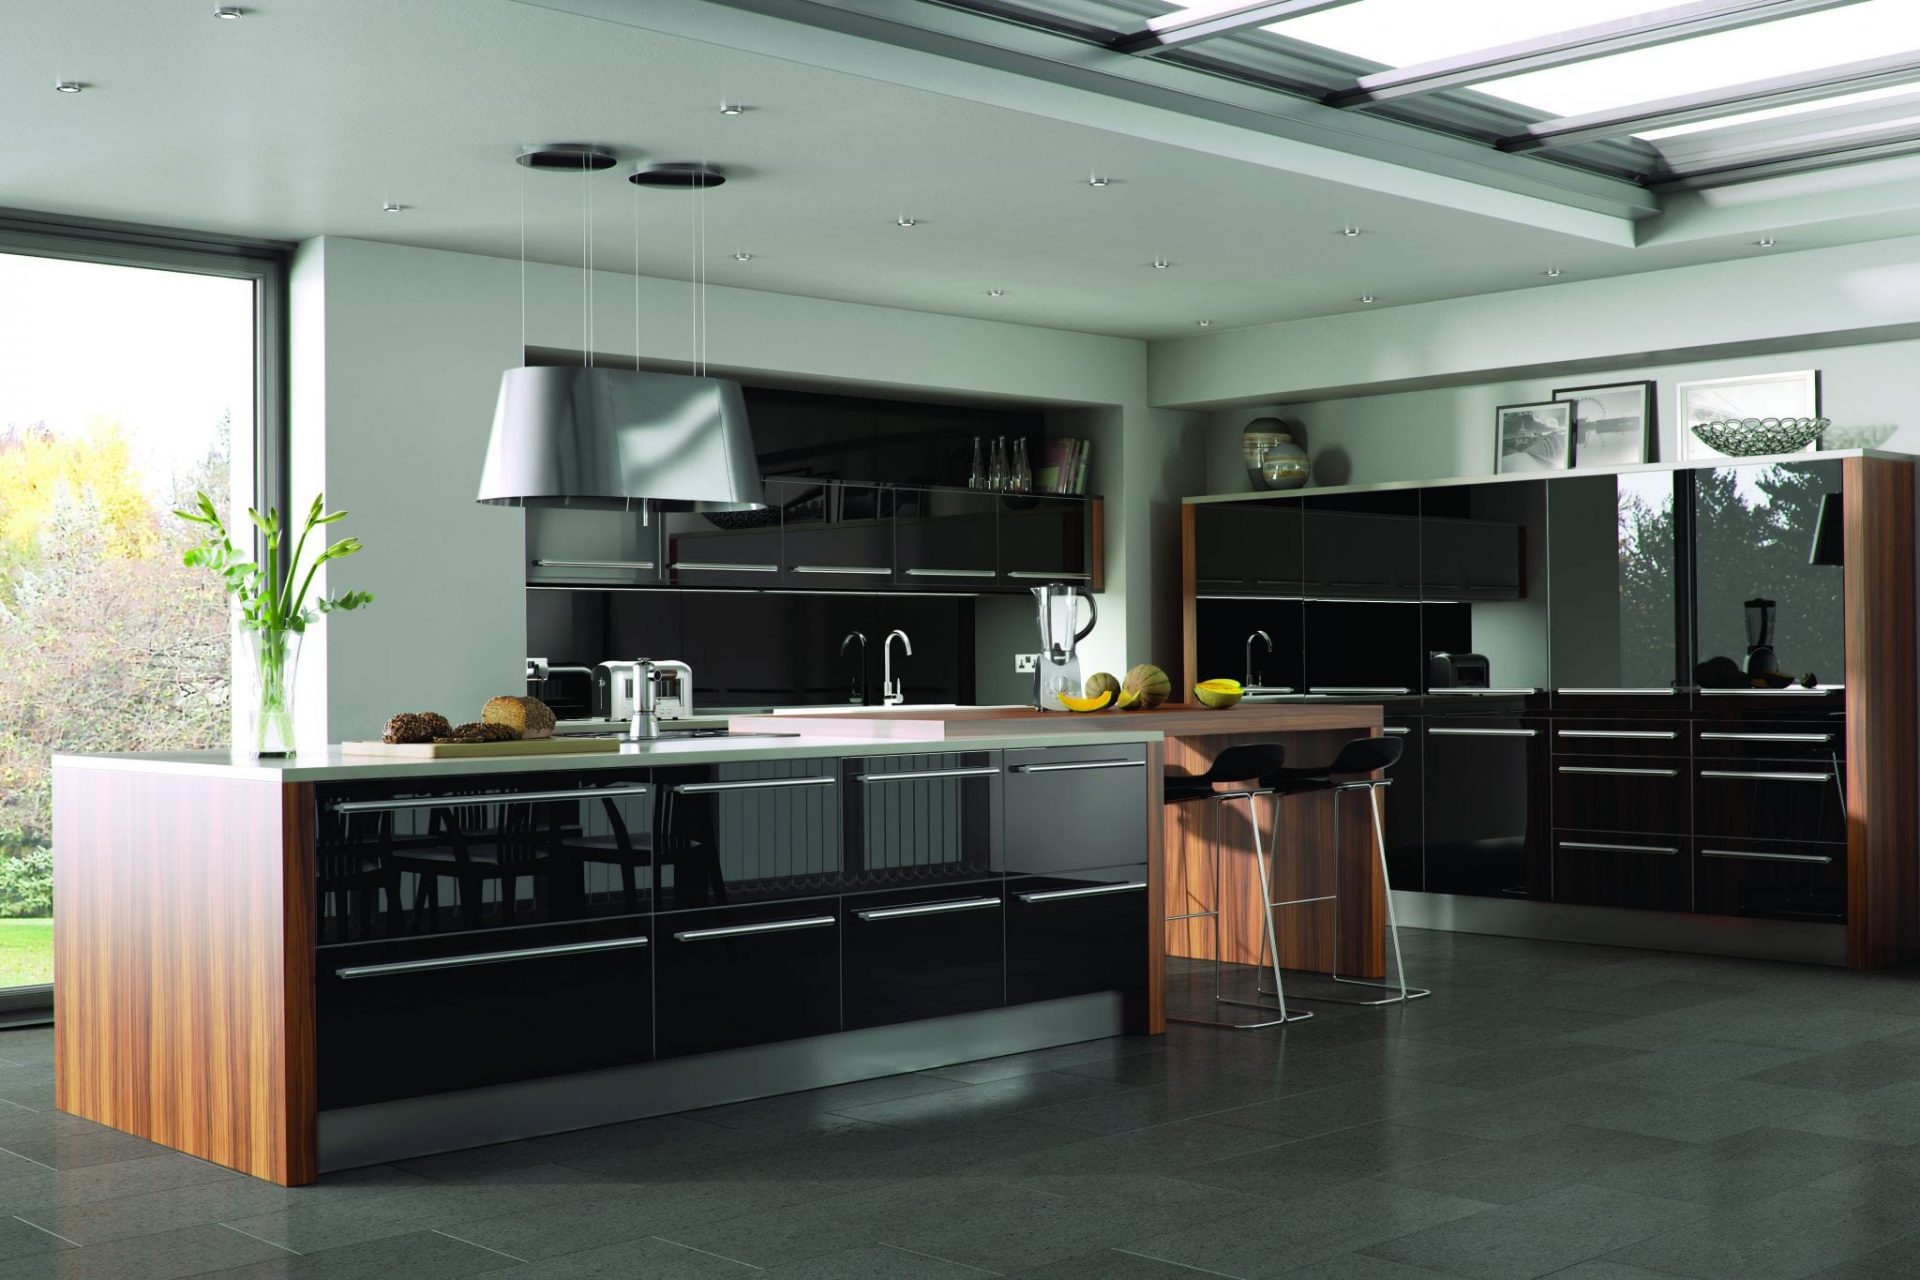 Genoa kitchen in black gloss